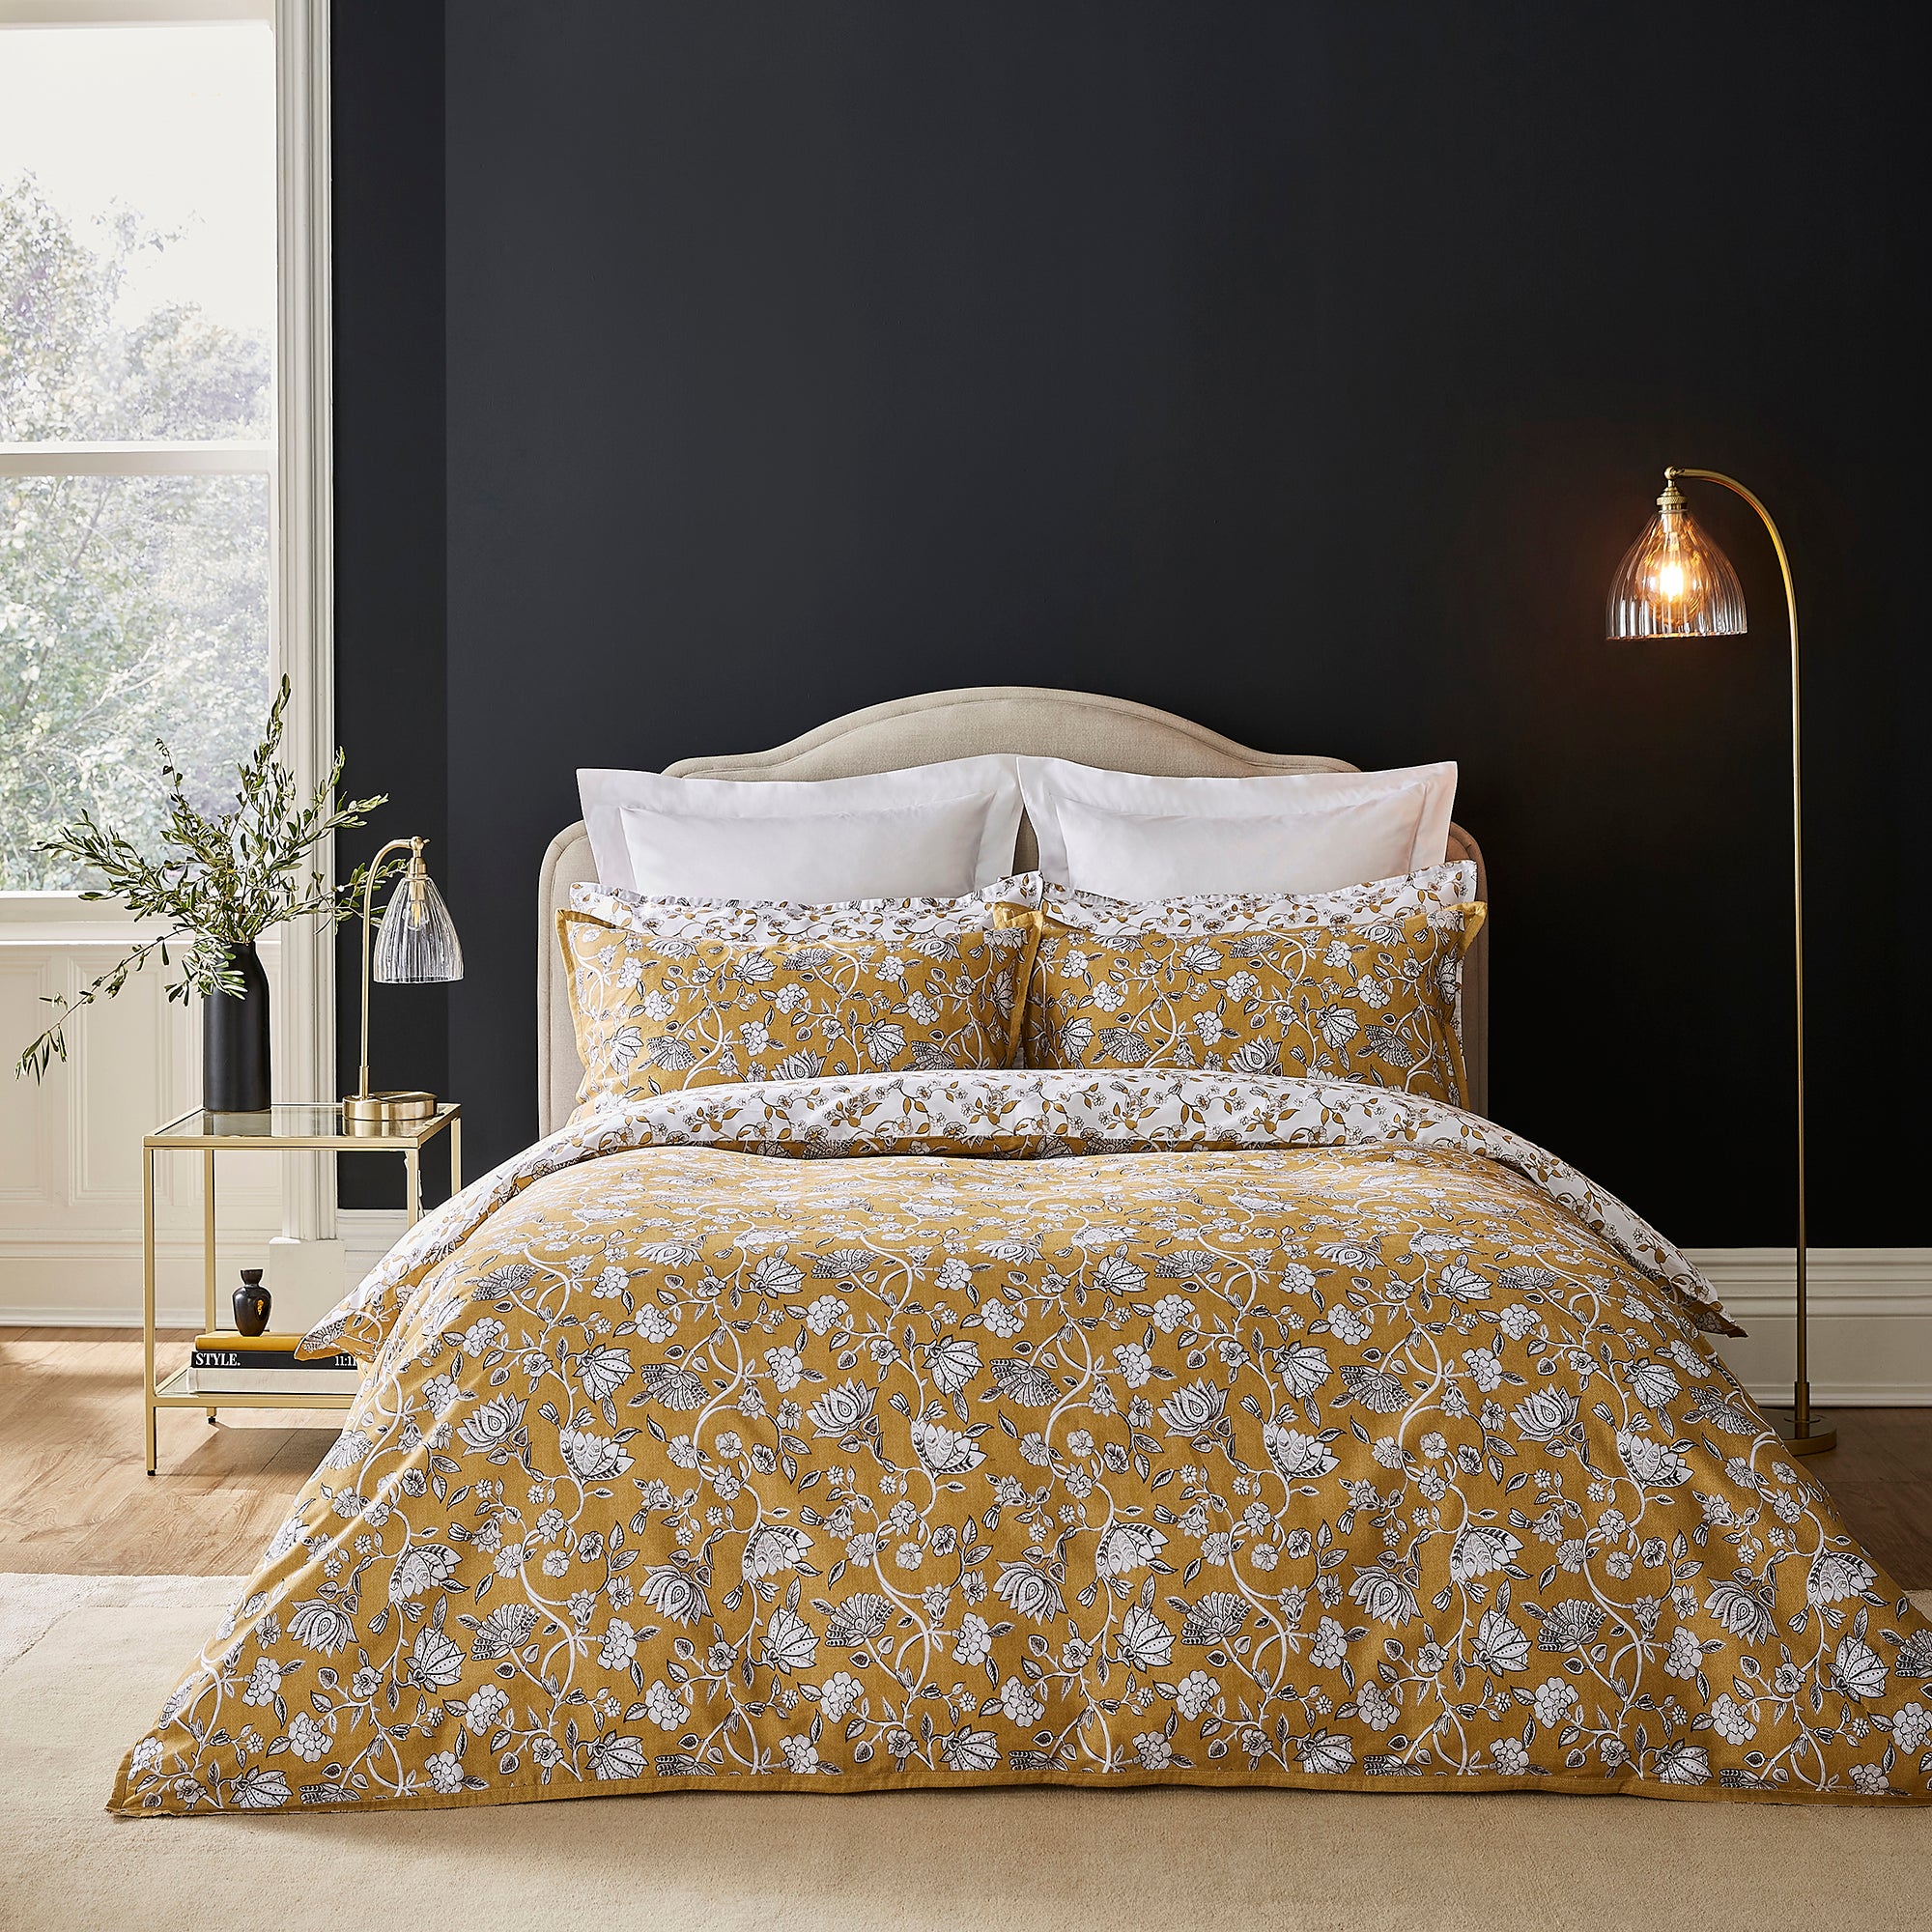 Dorma Evander Ochre Cotton Duvet Cover and Pillowcase Set yellow